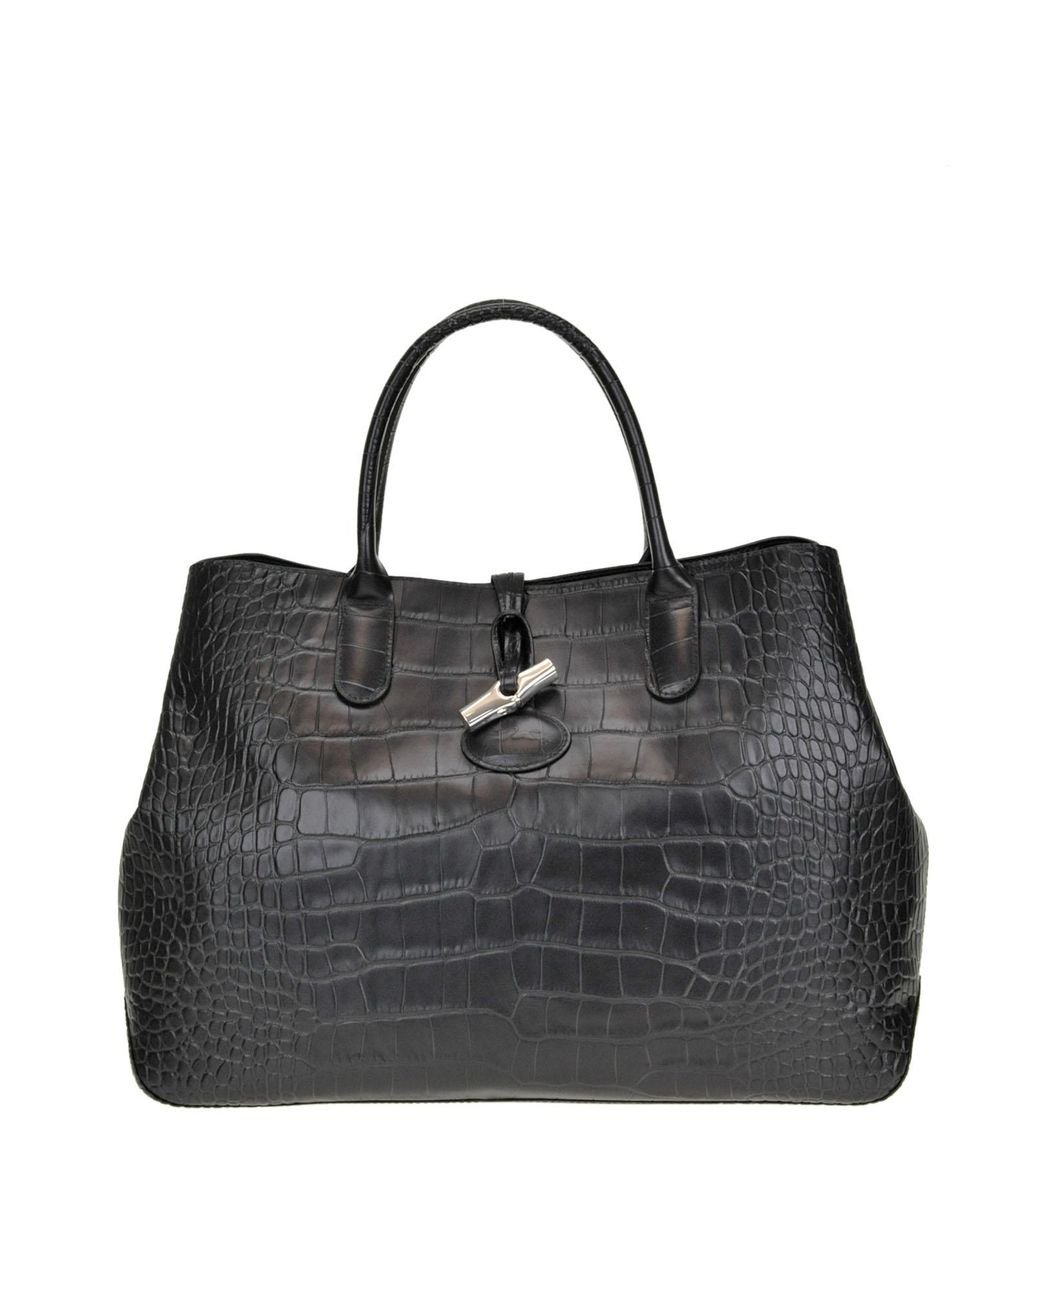 Longchamp Crocodile Print Leather Bag in Black | Lyst